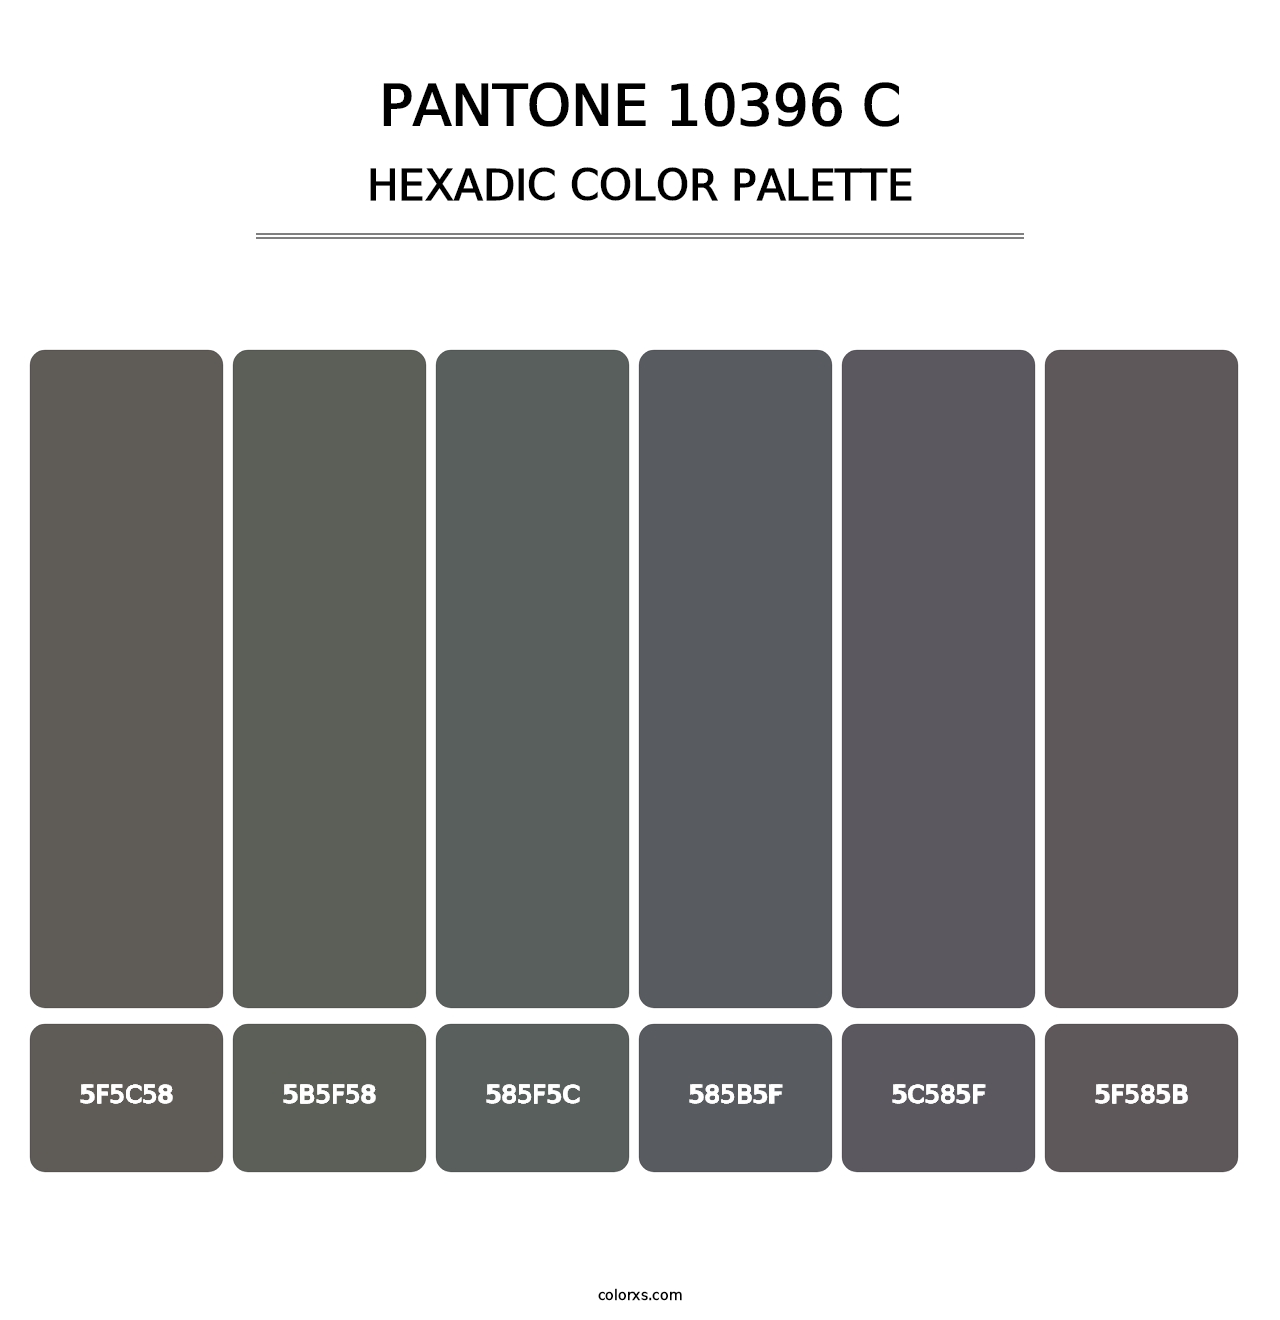 PANTONE 10396 C - Hexadic Color Palette